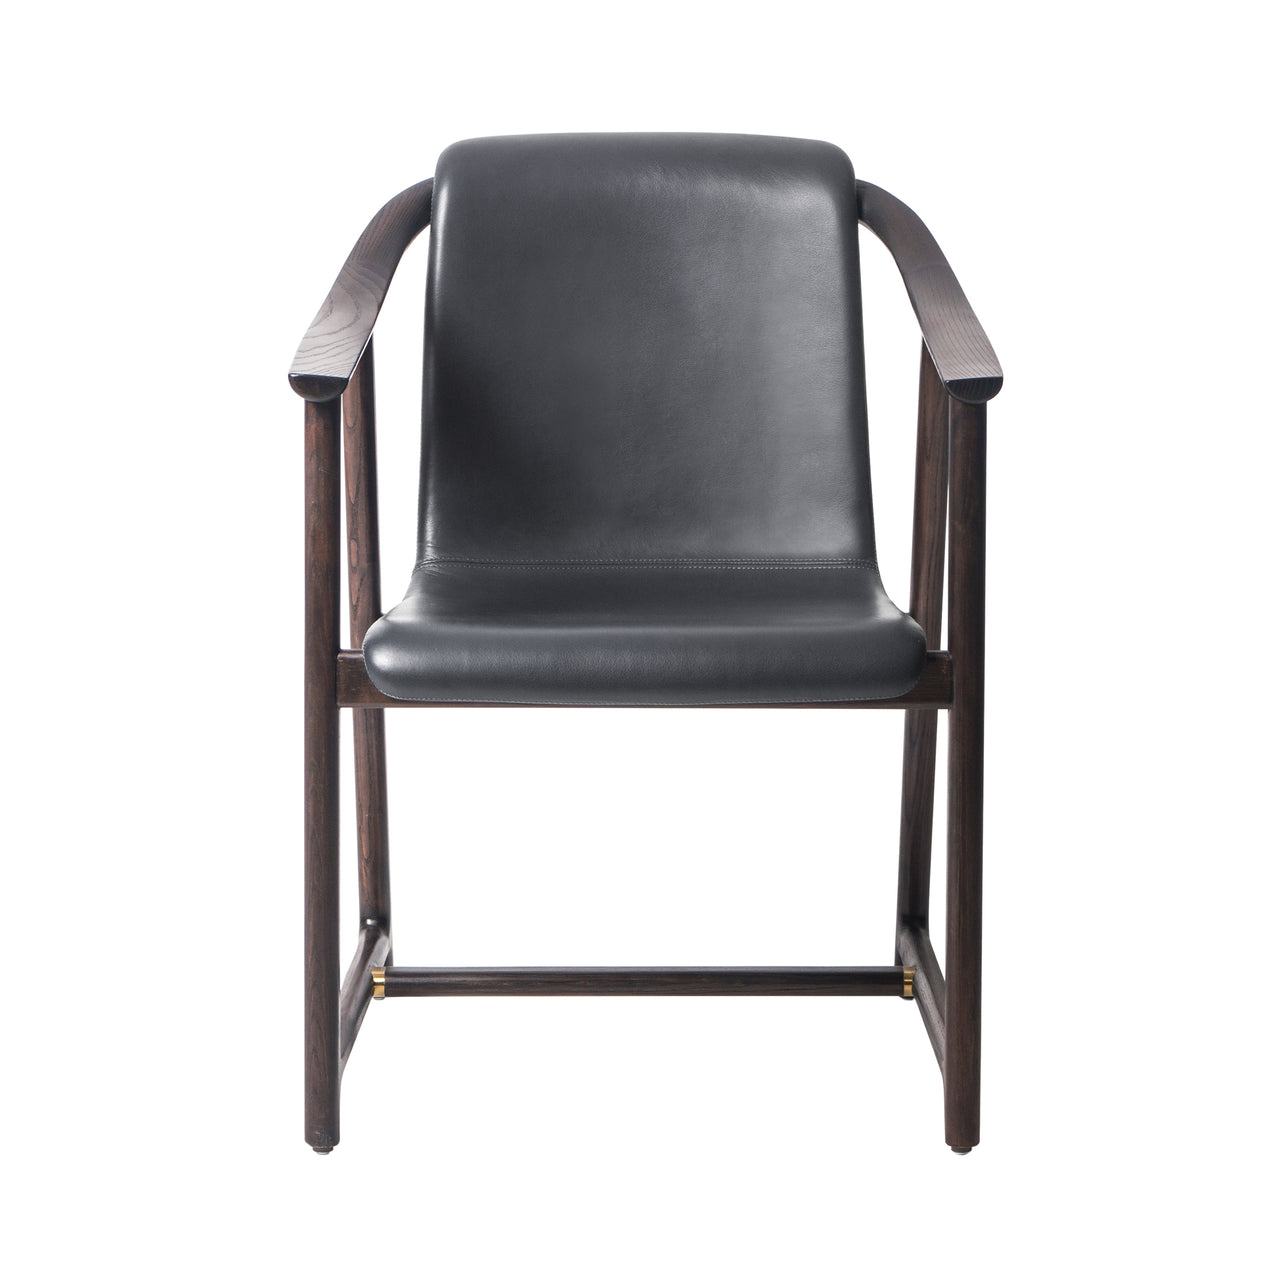 Mandarin Dining Chair: Dark Brown Oak